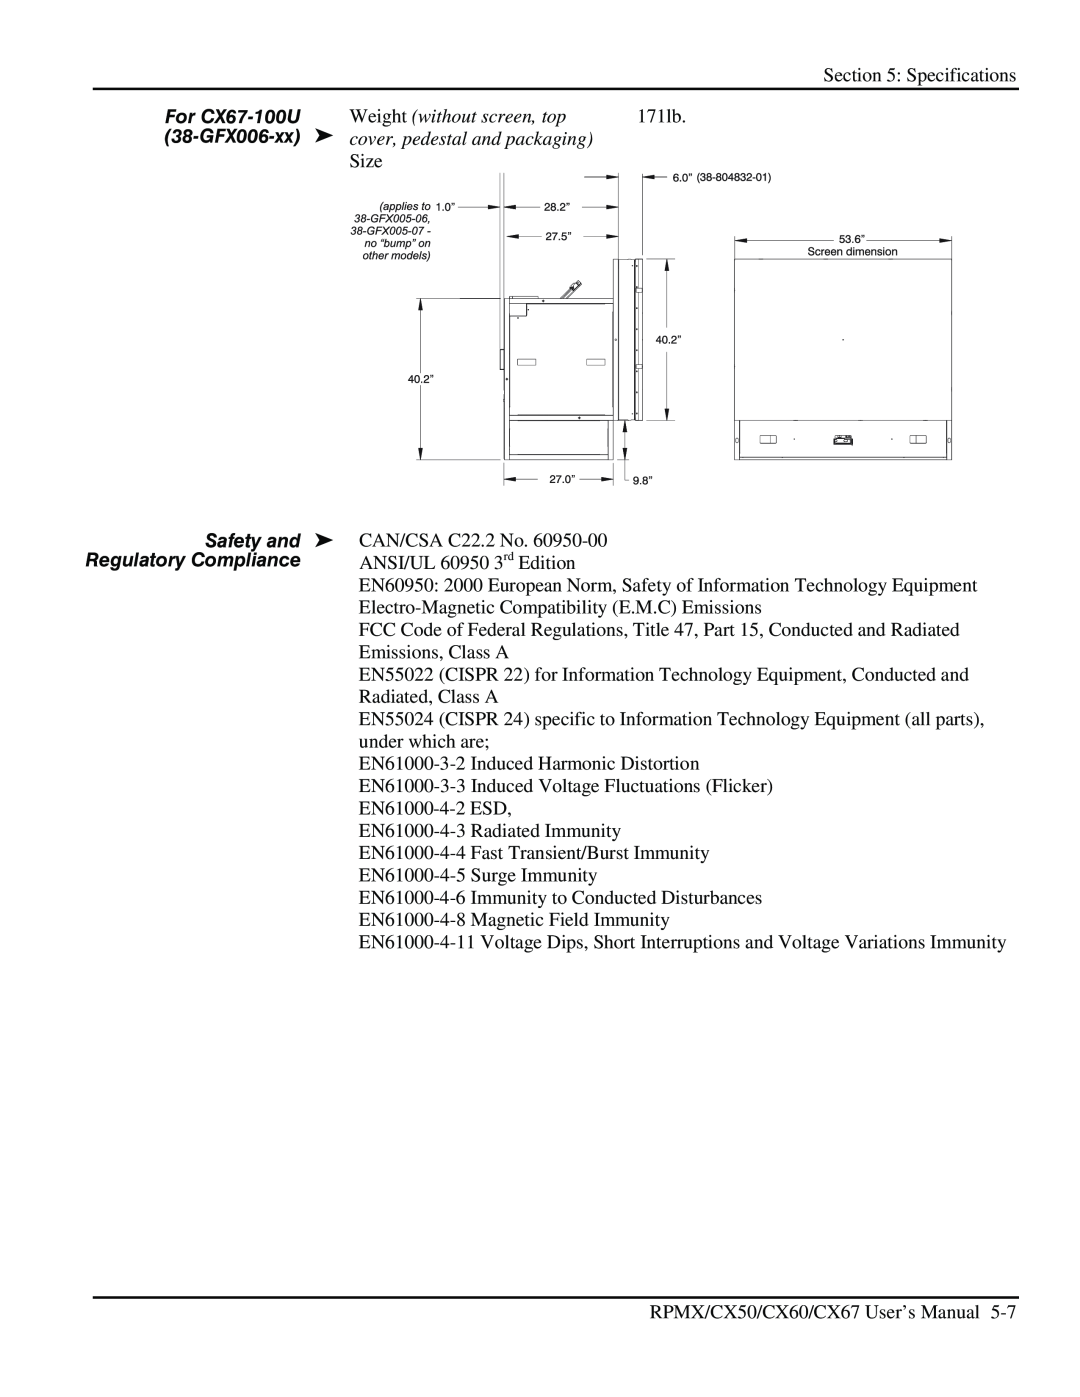 Christie Digital Systems CX50, CX60 user manual For CX67-100U, 38-GFX006-xx, Regulatory Compliance ANSI/UL 60950 3rd Edition 